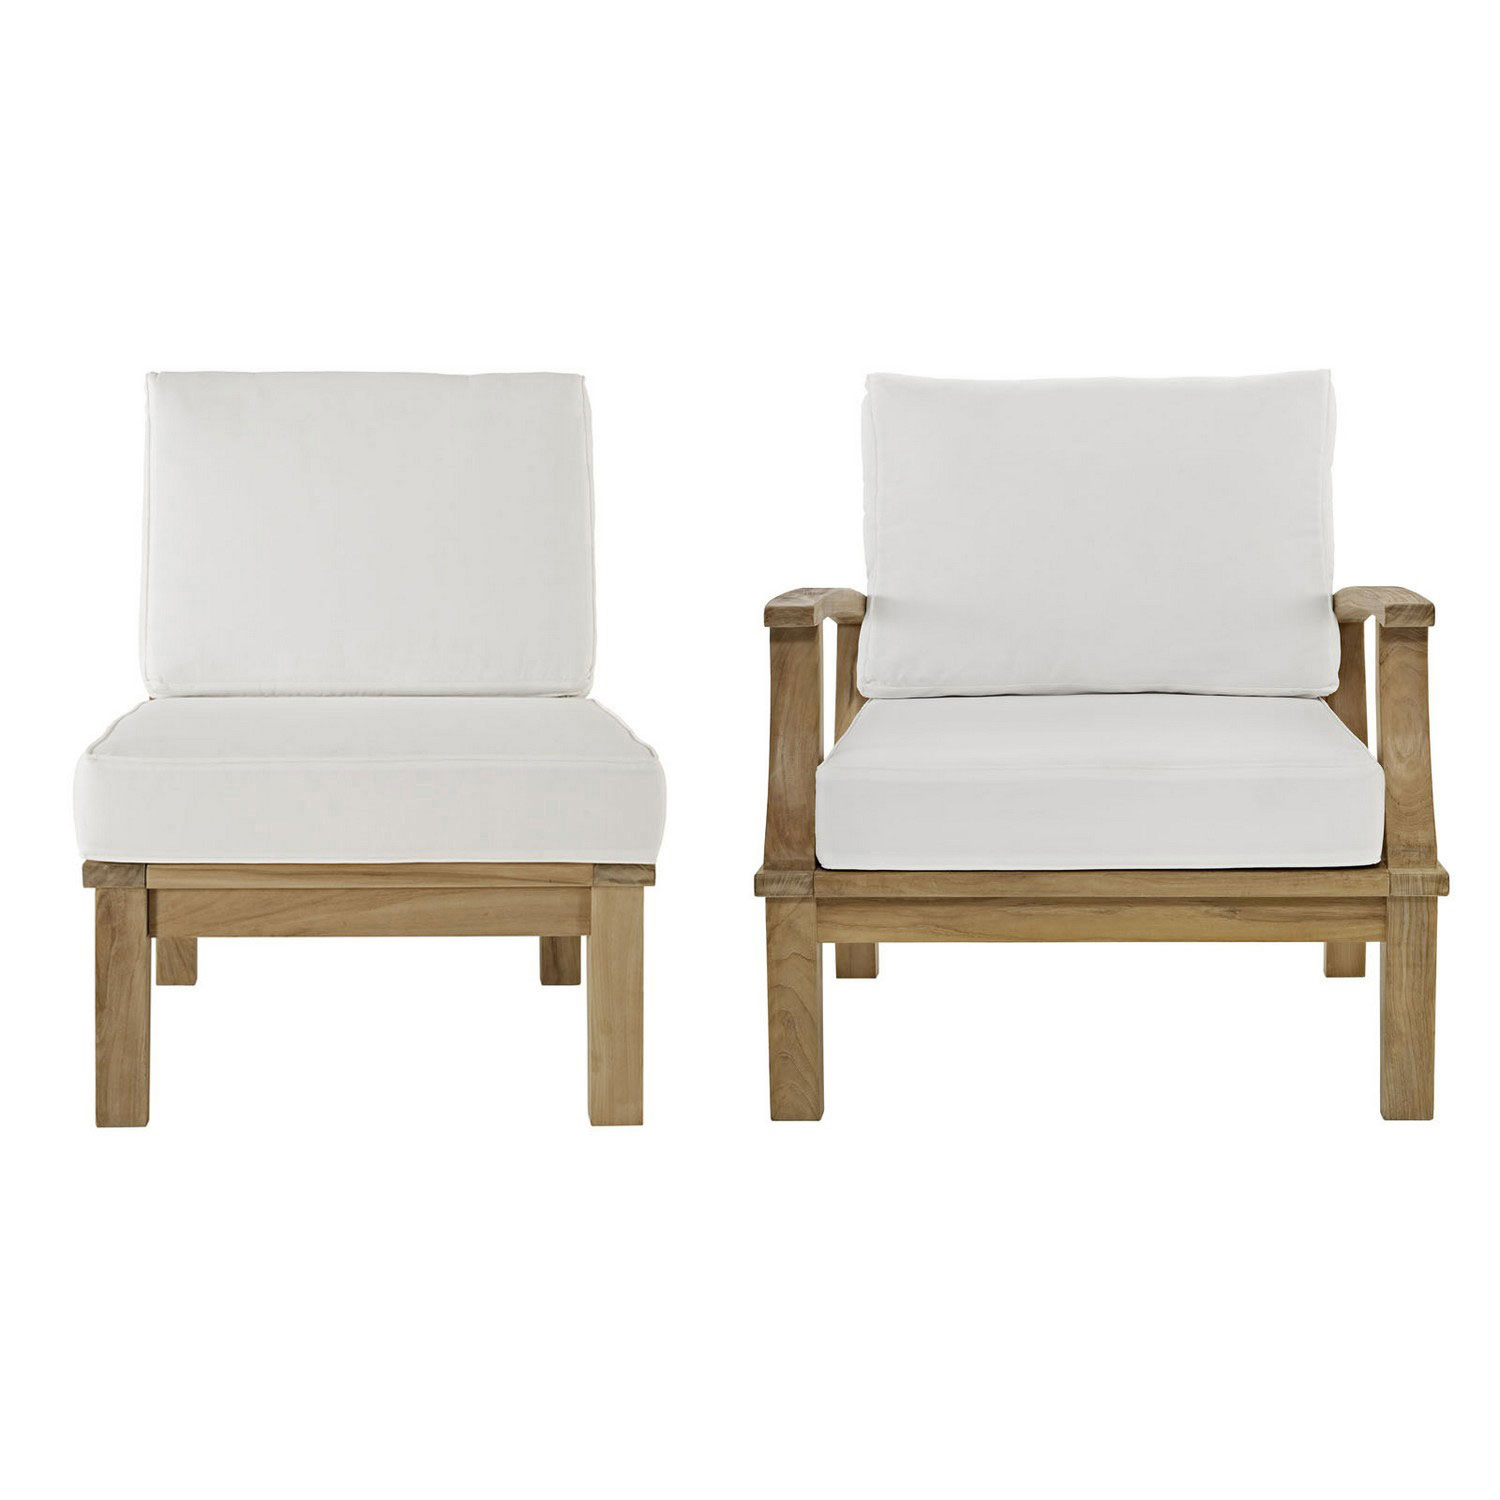 Modway Marina 2 Piece Outdoor Patio Teak Sofa Set - Natural White